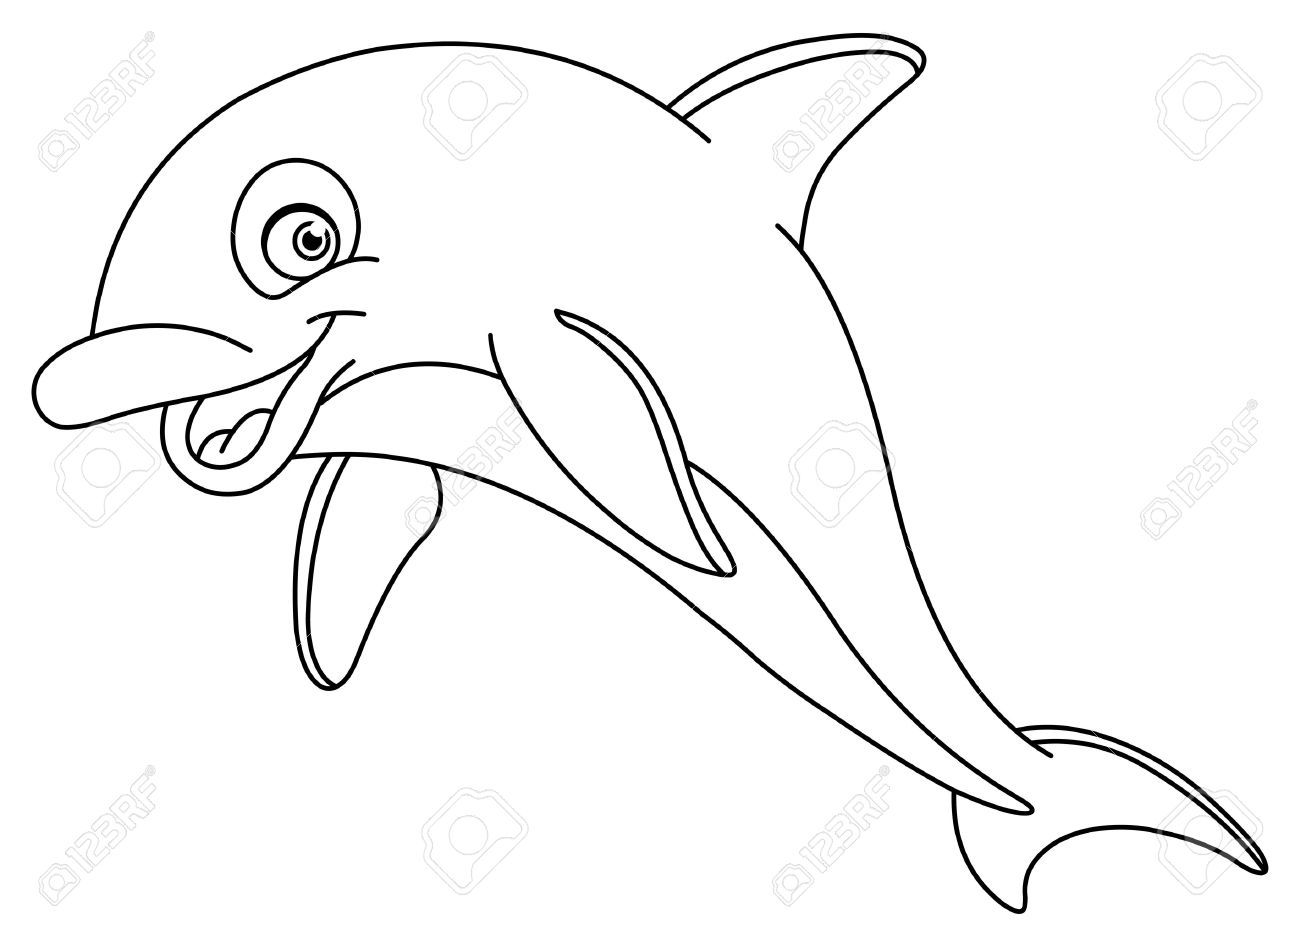 Dolphin clipart. Https www google com